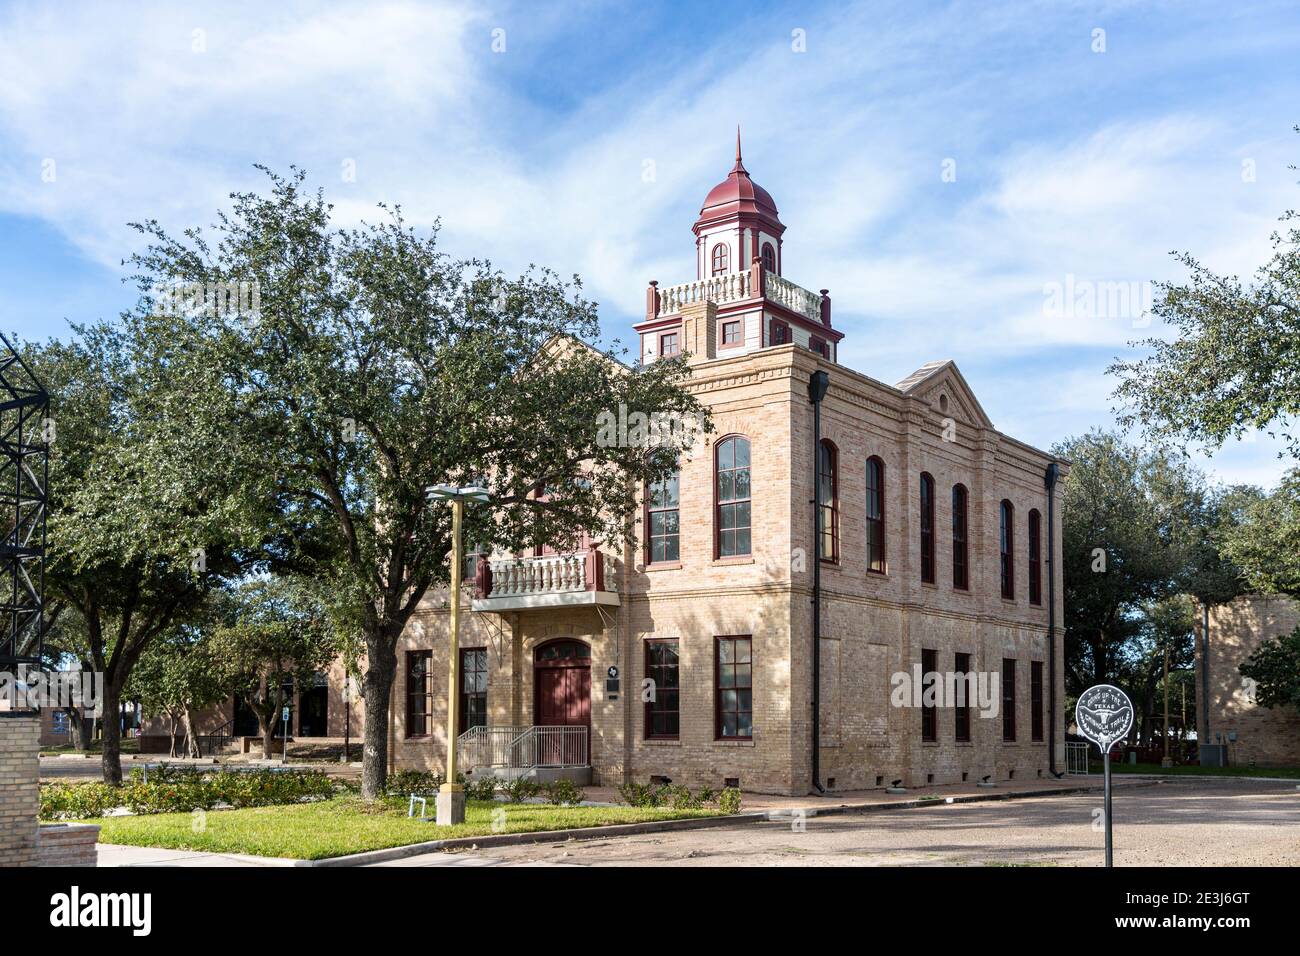 The historic 1886 Hidalgo County Courthouse in Hidalgo, Texas. Stock Photo